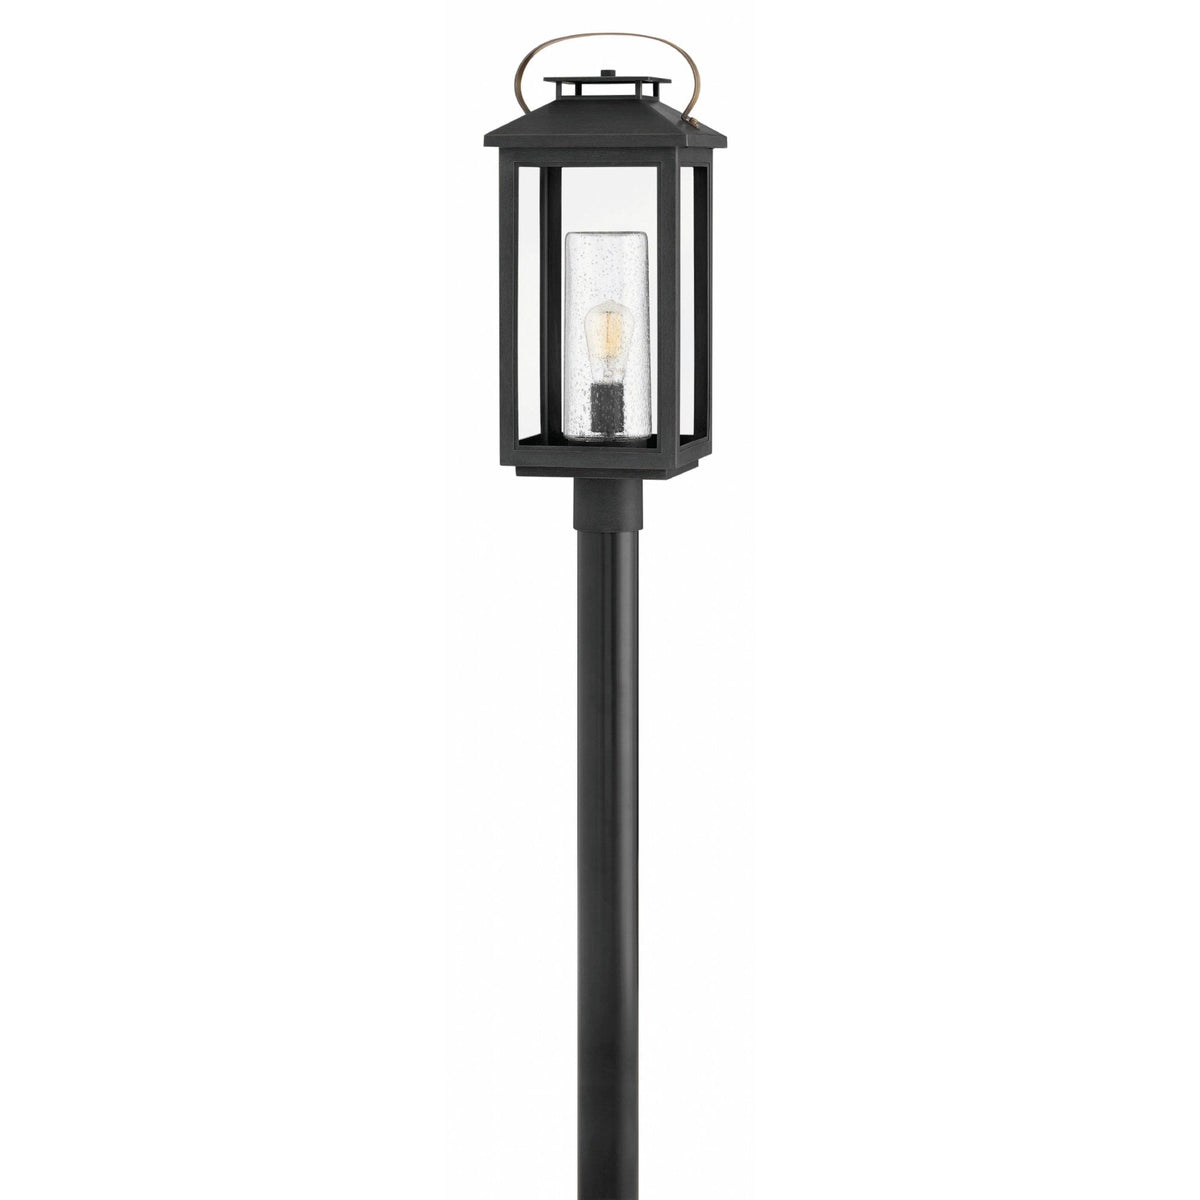 Hinkley Atwater Coastal Elements Outdoor Post Lantern 1161-BK Black Coastal Lighting